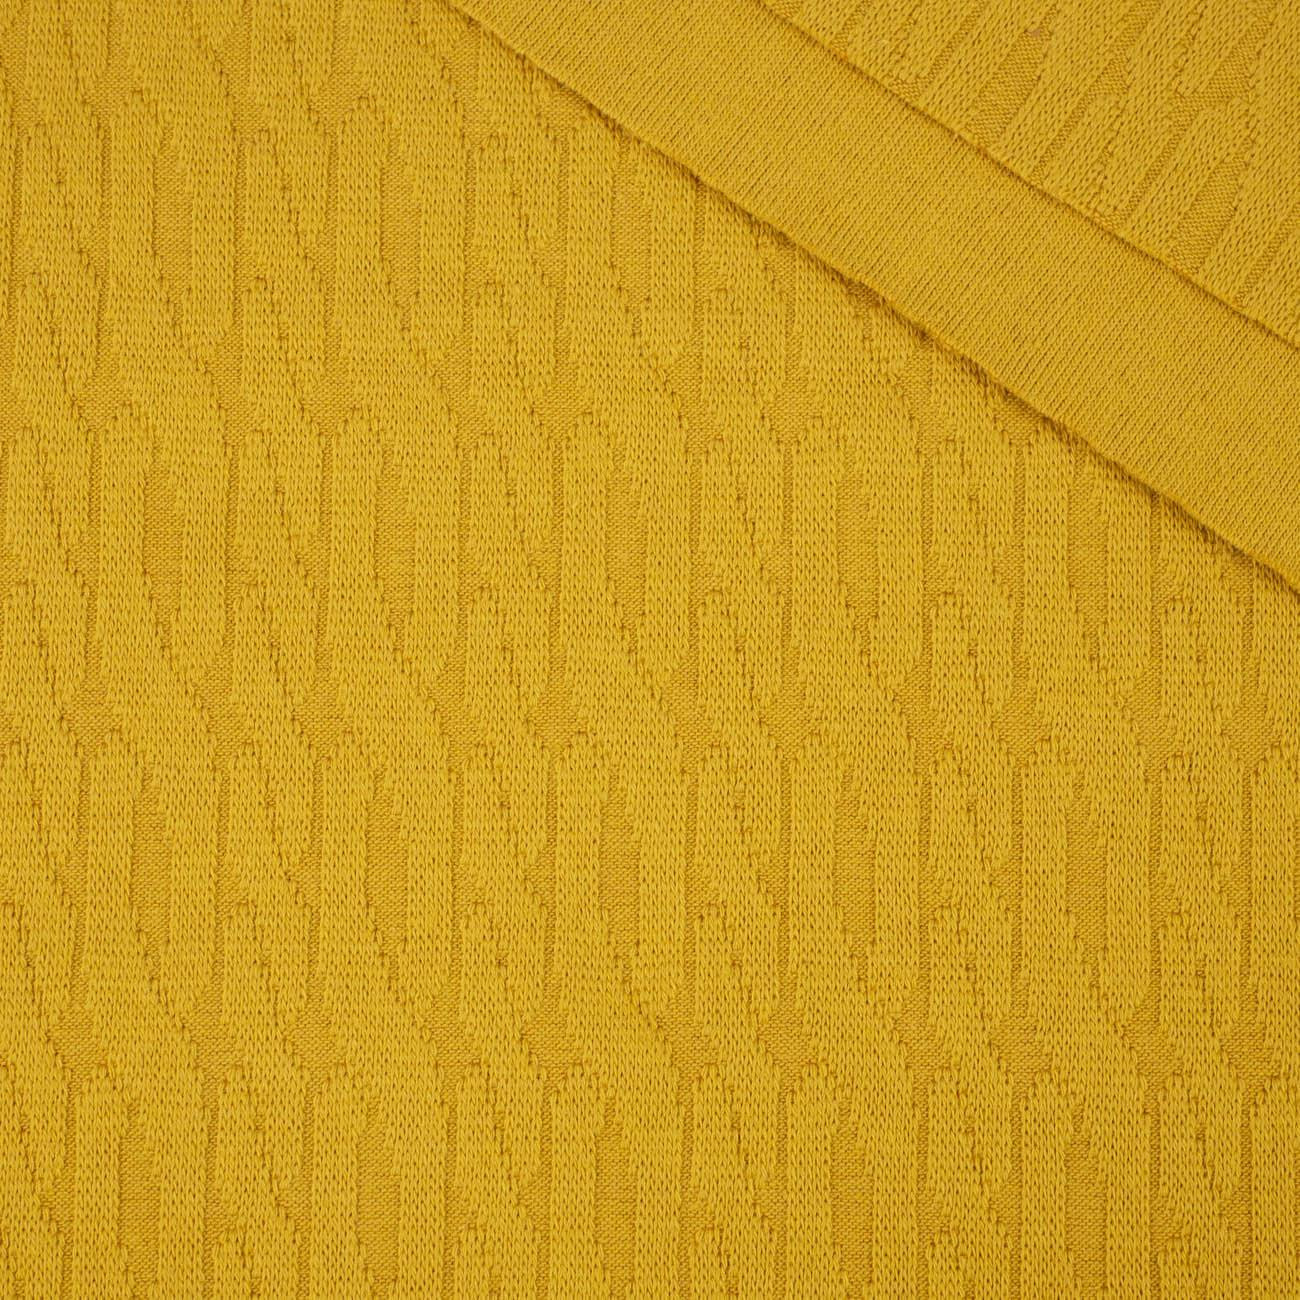 Mustard - Sweater knit fabric 420g - Braid